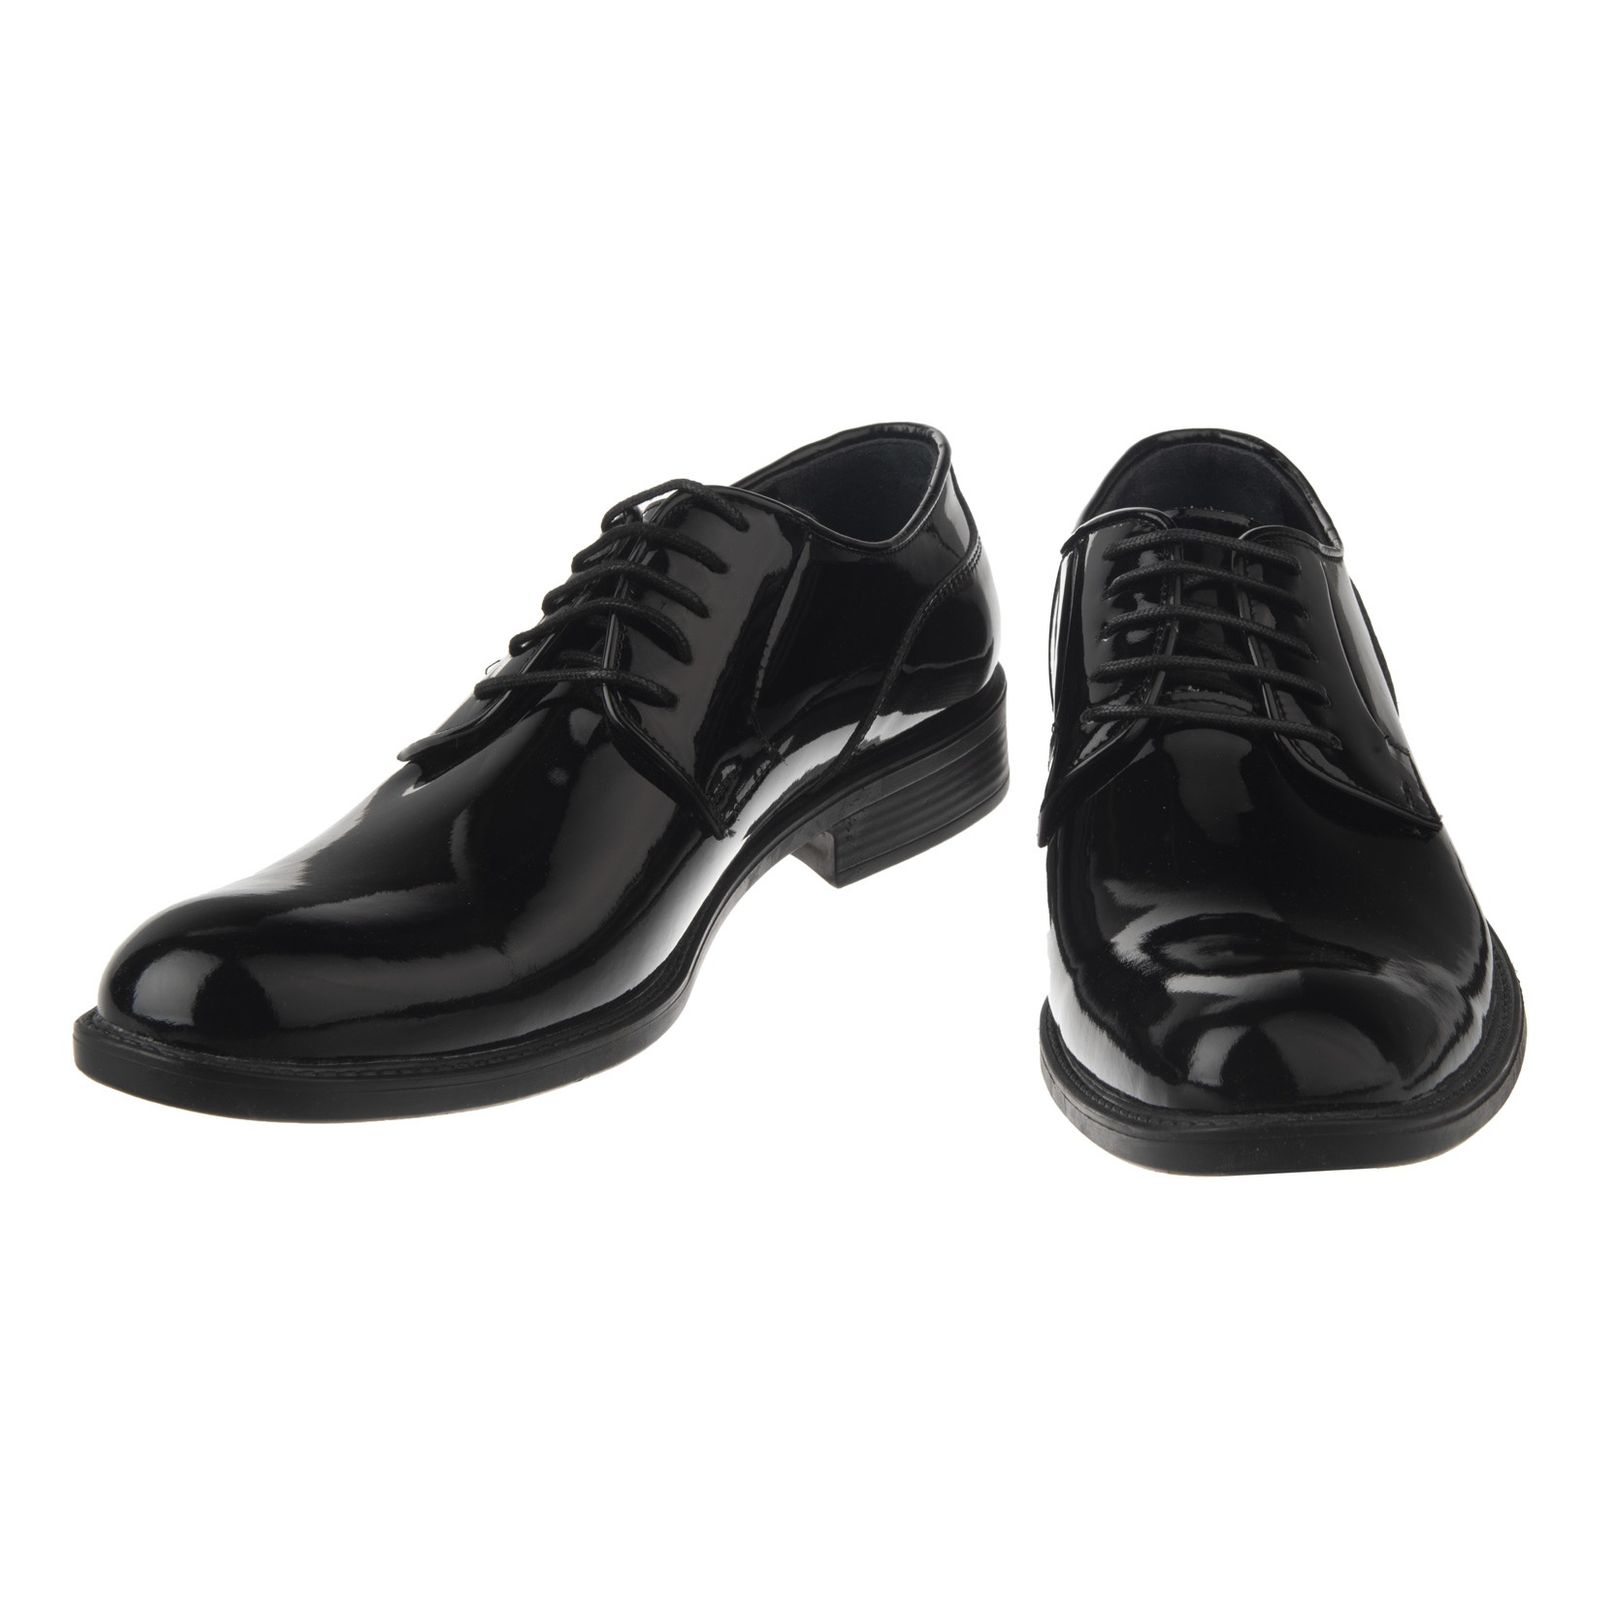 کفش مردانه شیفر مدل 7219E-101 - مشکی - 5